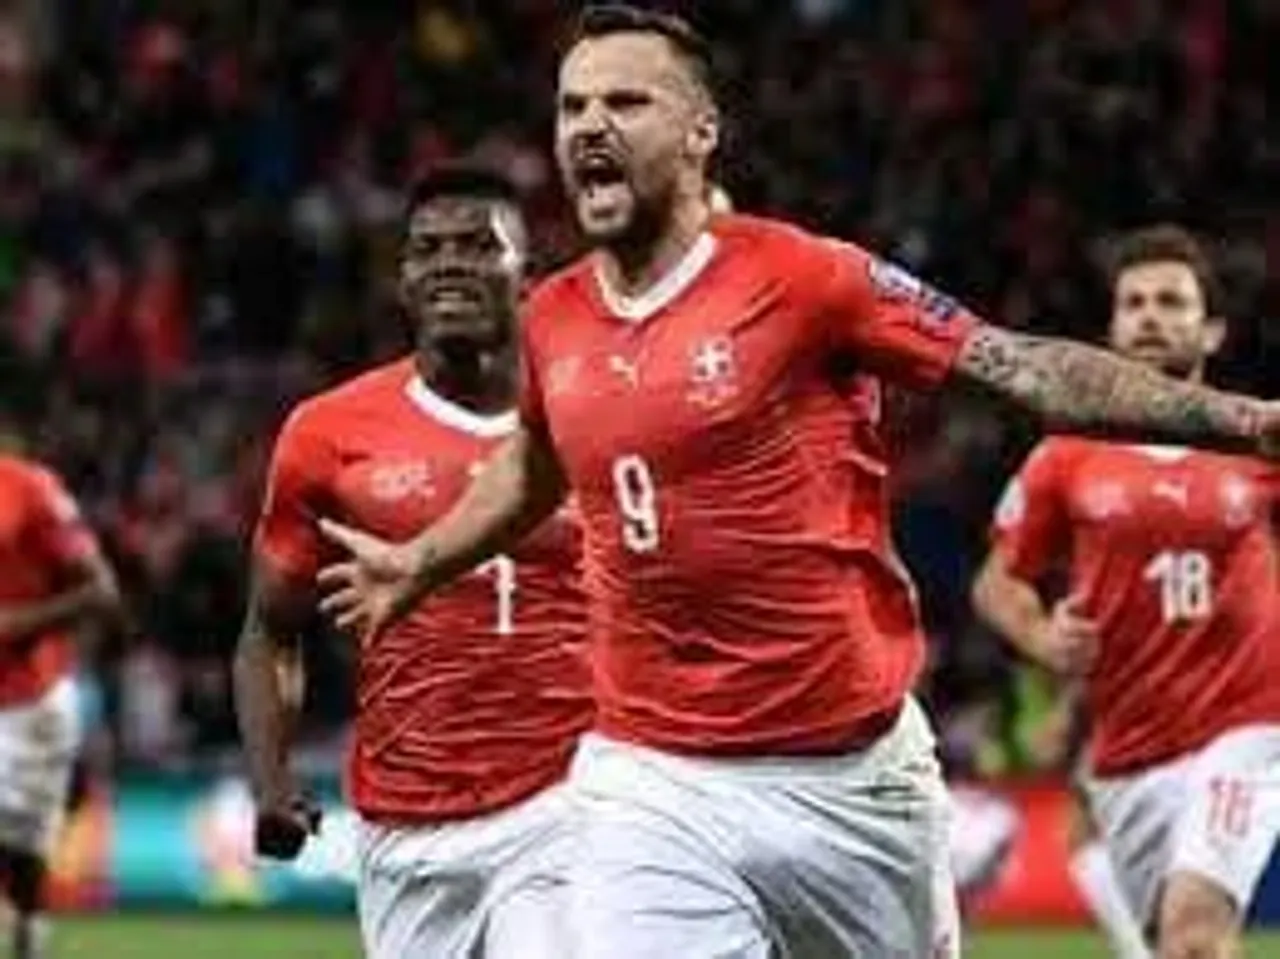 Switzerland vs Turkey: Euro 2020 Match Preview, Team News, Dream 11 Prediction